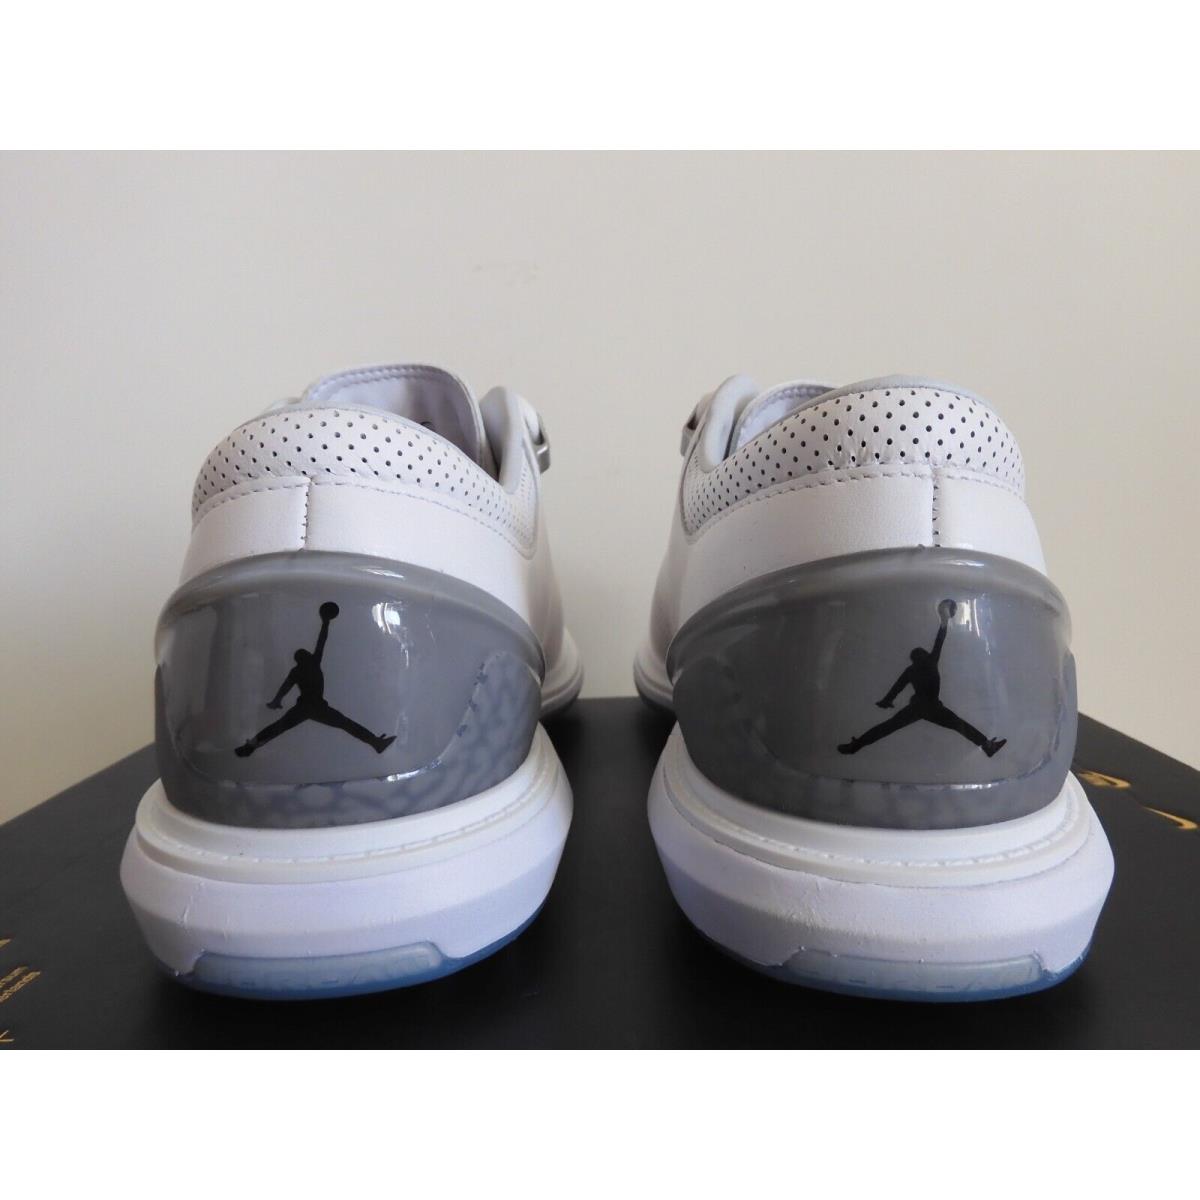 Nike shoes ADG - White 2